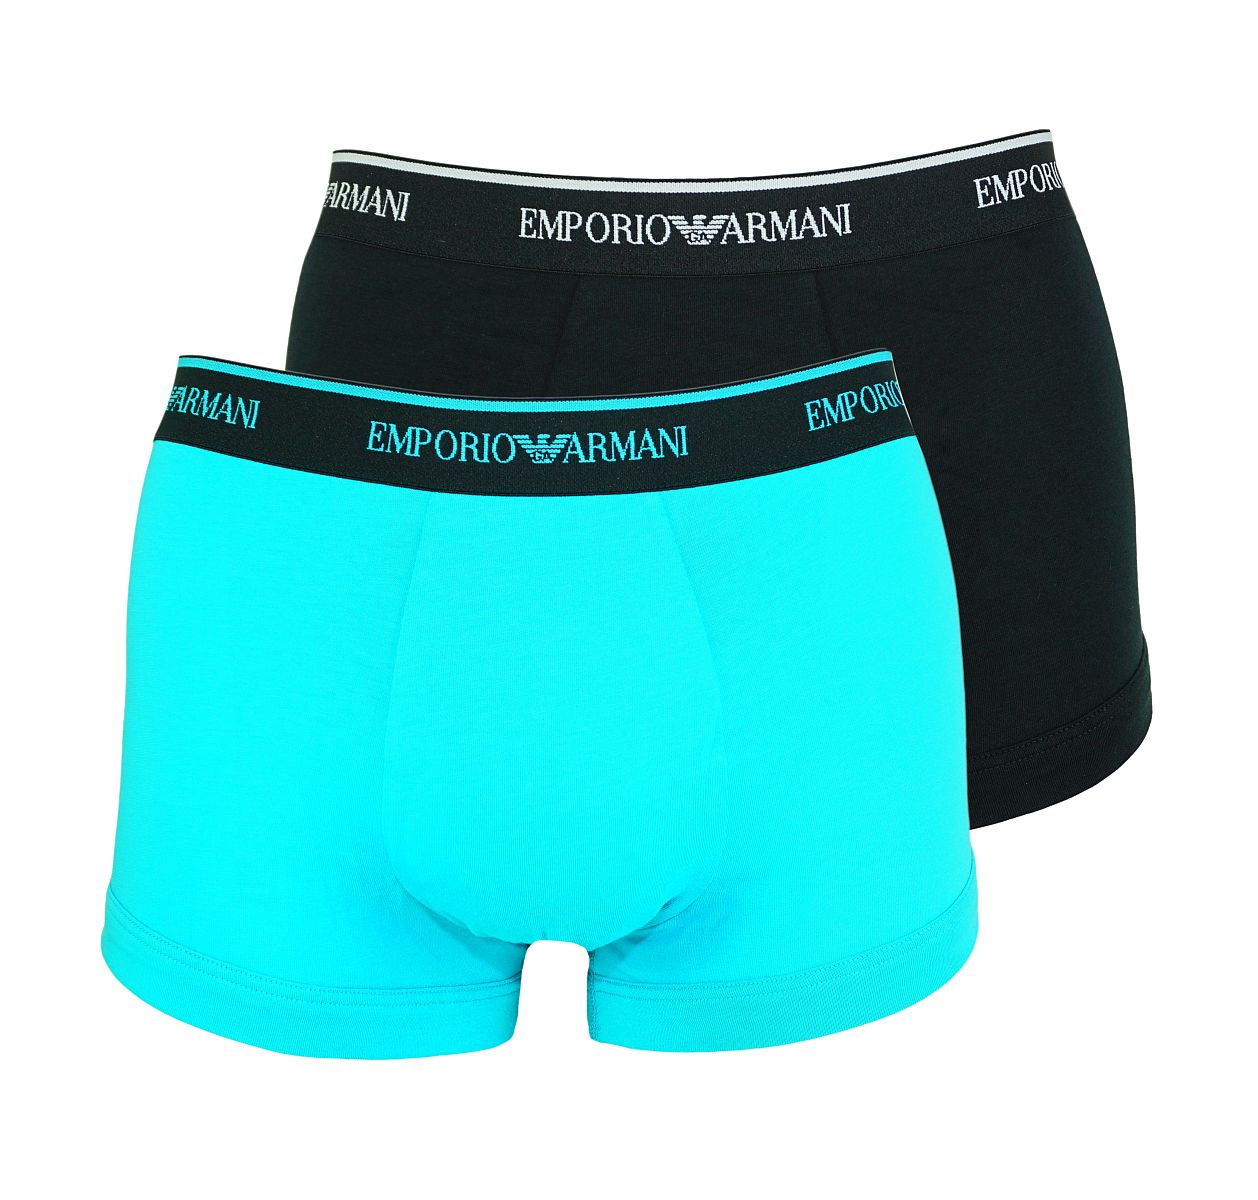 Emporio Armani 2er Pack Shorts Trunk Unterhose 111210 8P717 05320 NERO/TURCHESE W18-EAT1